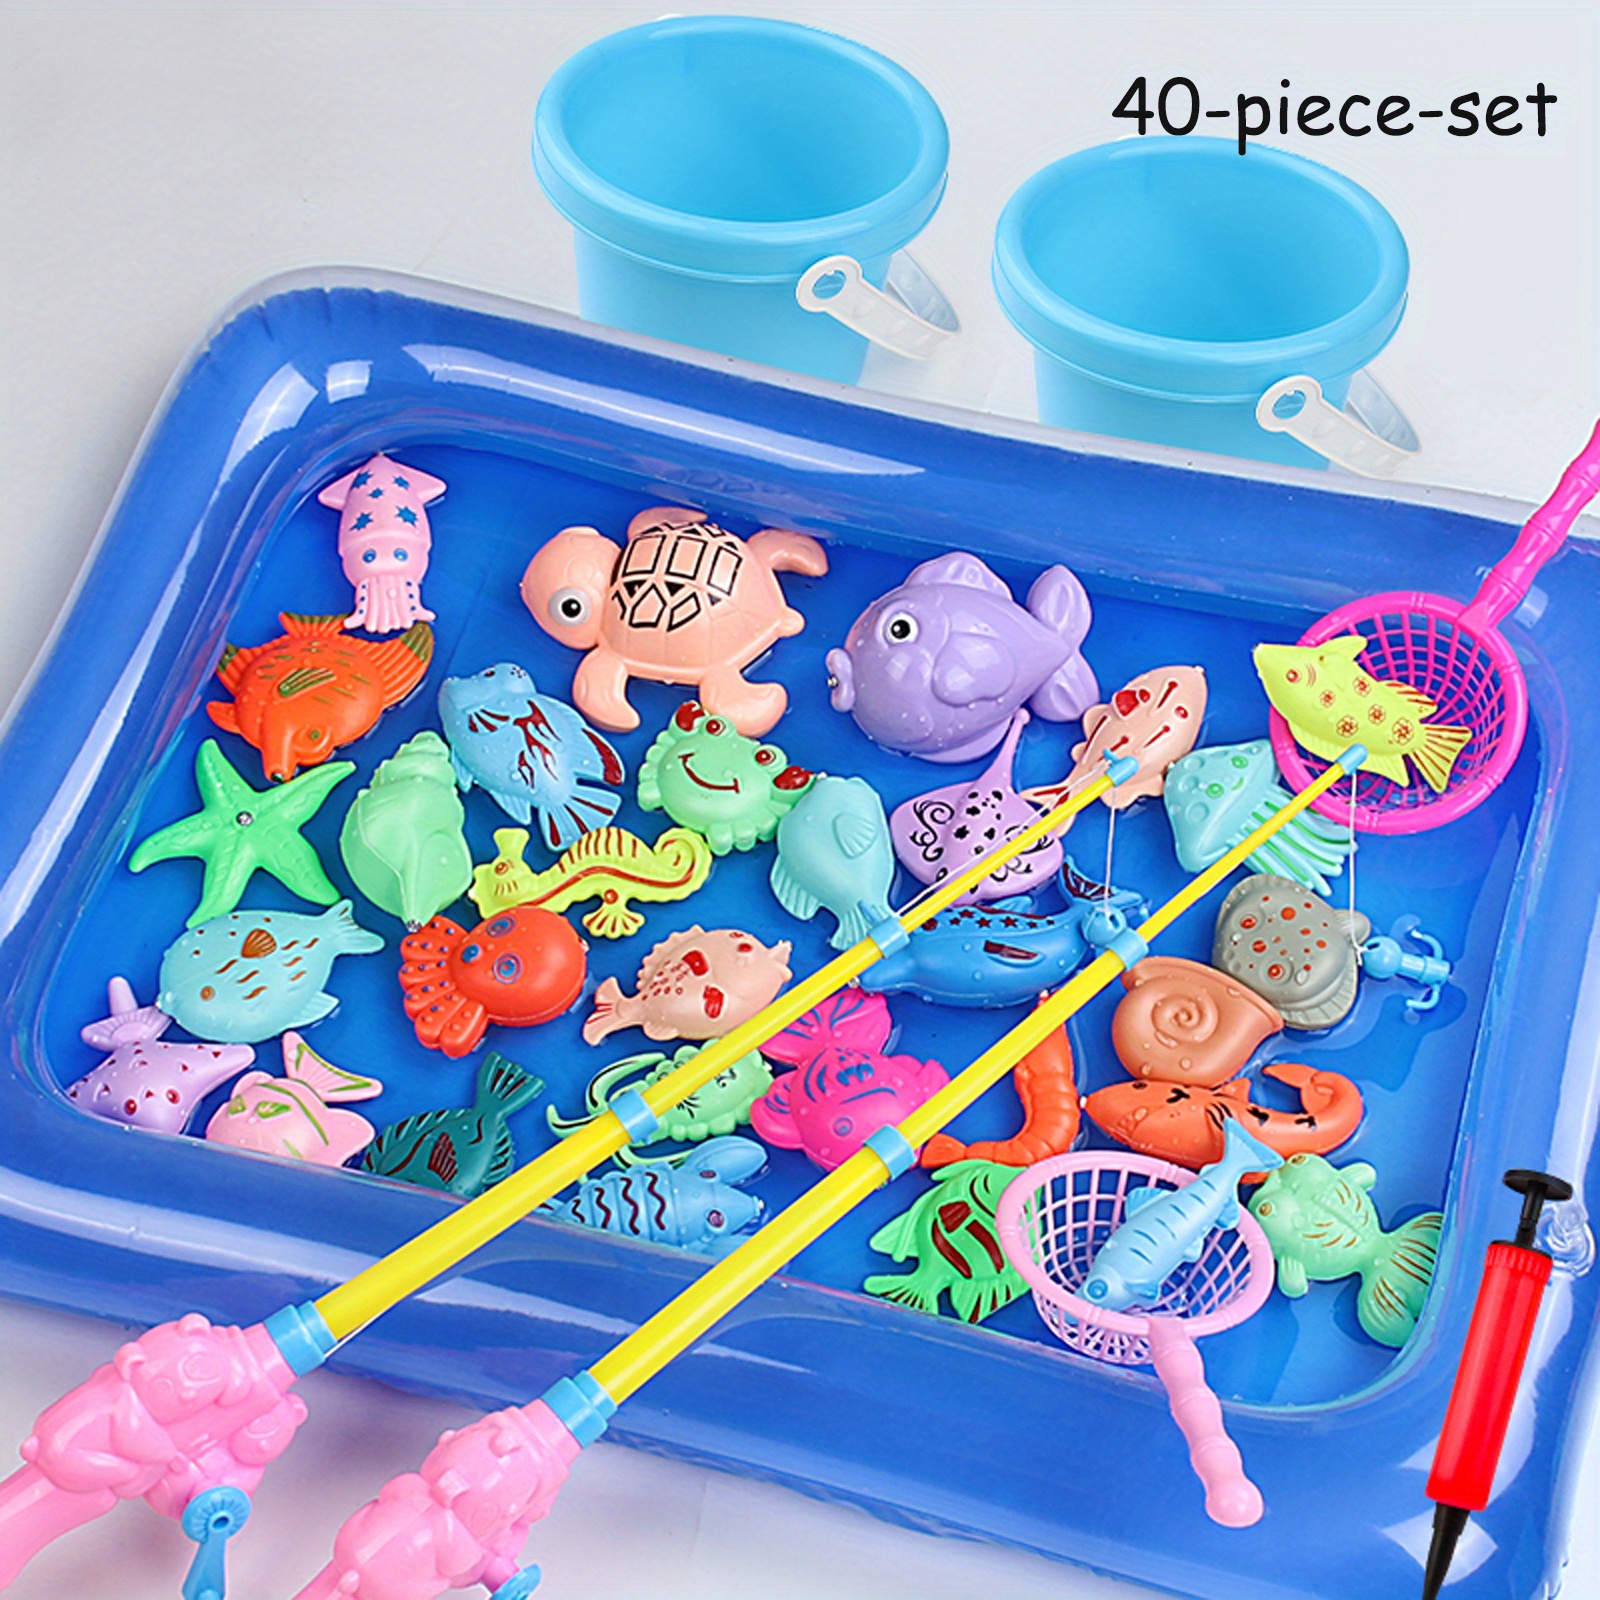 Leesgel Fishing Pool Toys for Kids, Kids Bath Toys Magnet Fishing Games, Bathtub Toys for Toddler, Pool Fishing Game, Water Toy for Kids, Outdoor